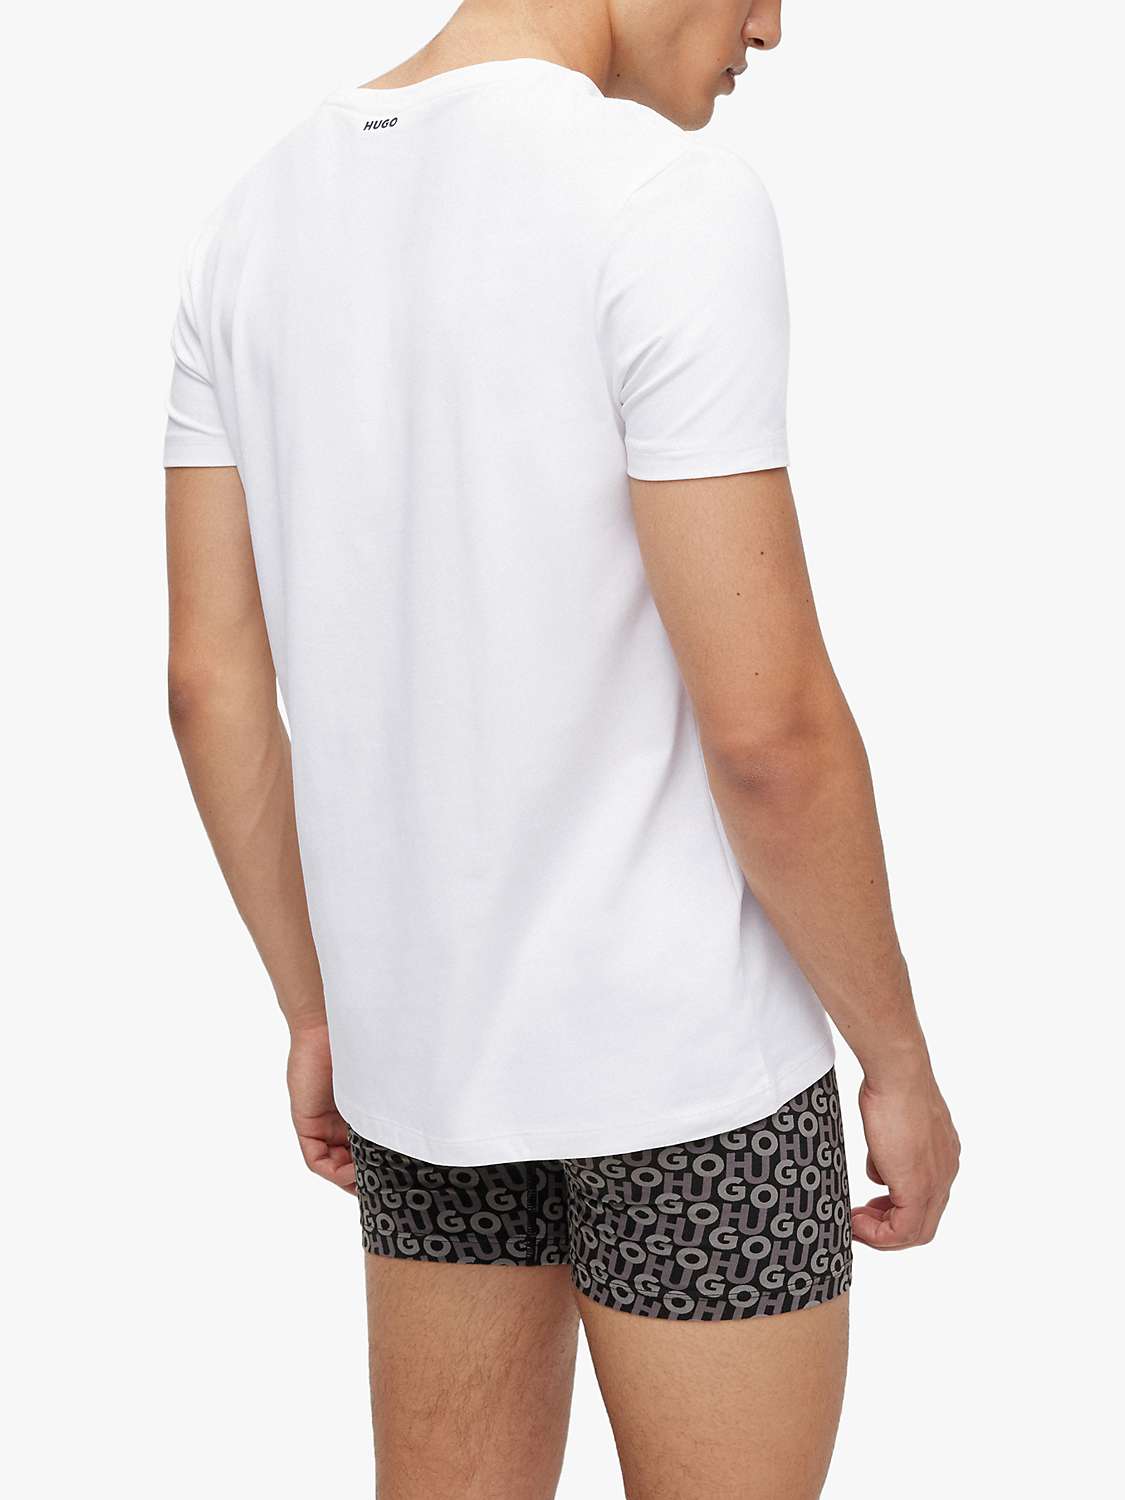 Buy HUGO Plain Cotton T-Shirt, Pack of 2, White Online at johnlewis.com